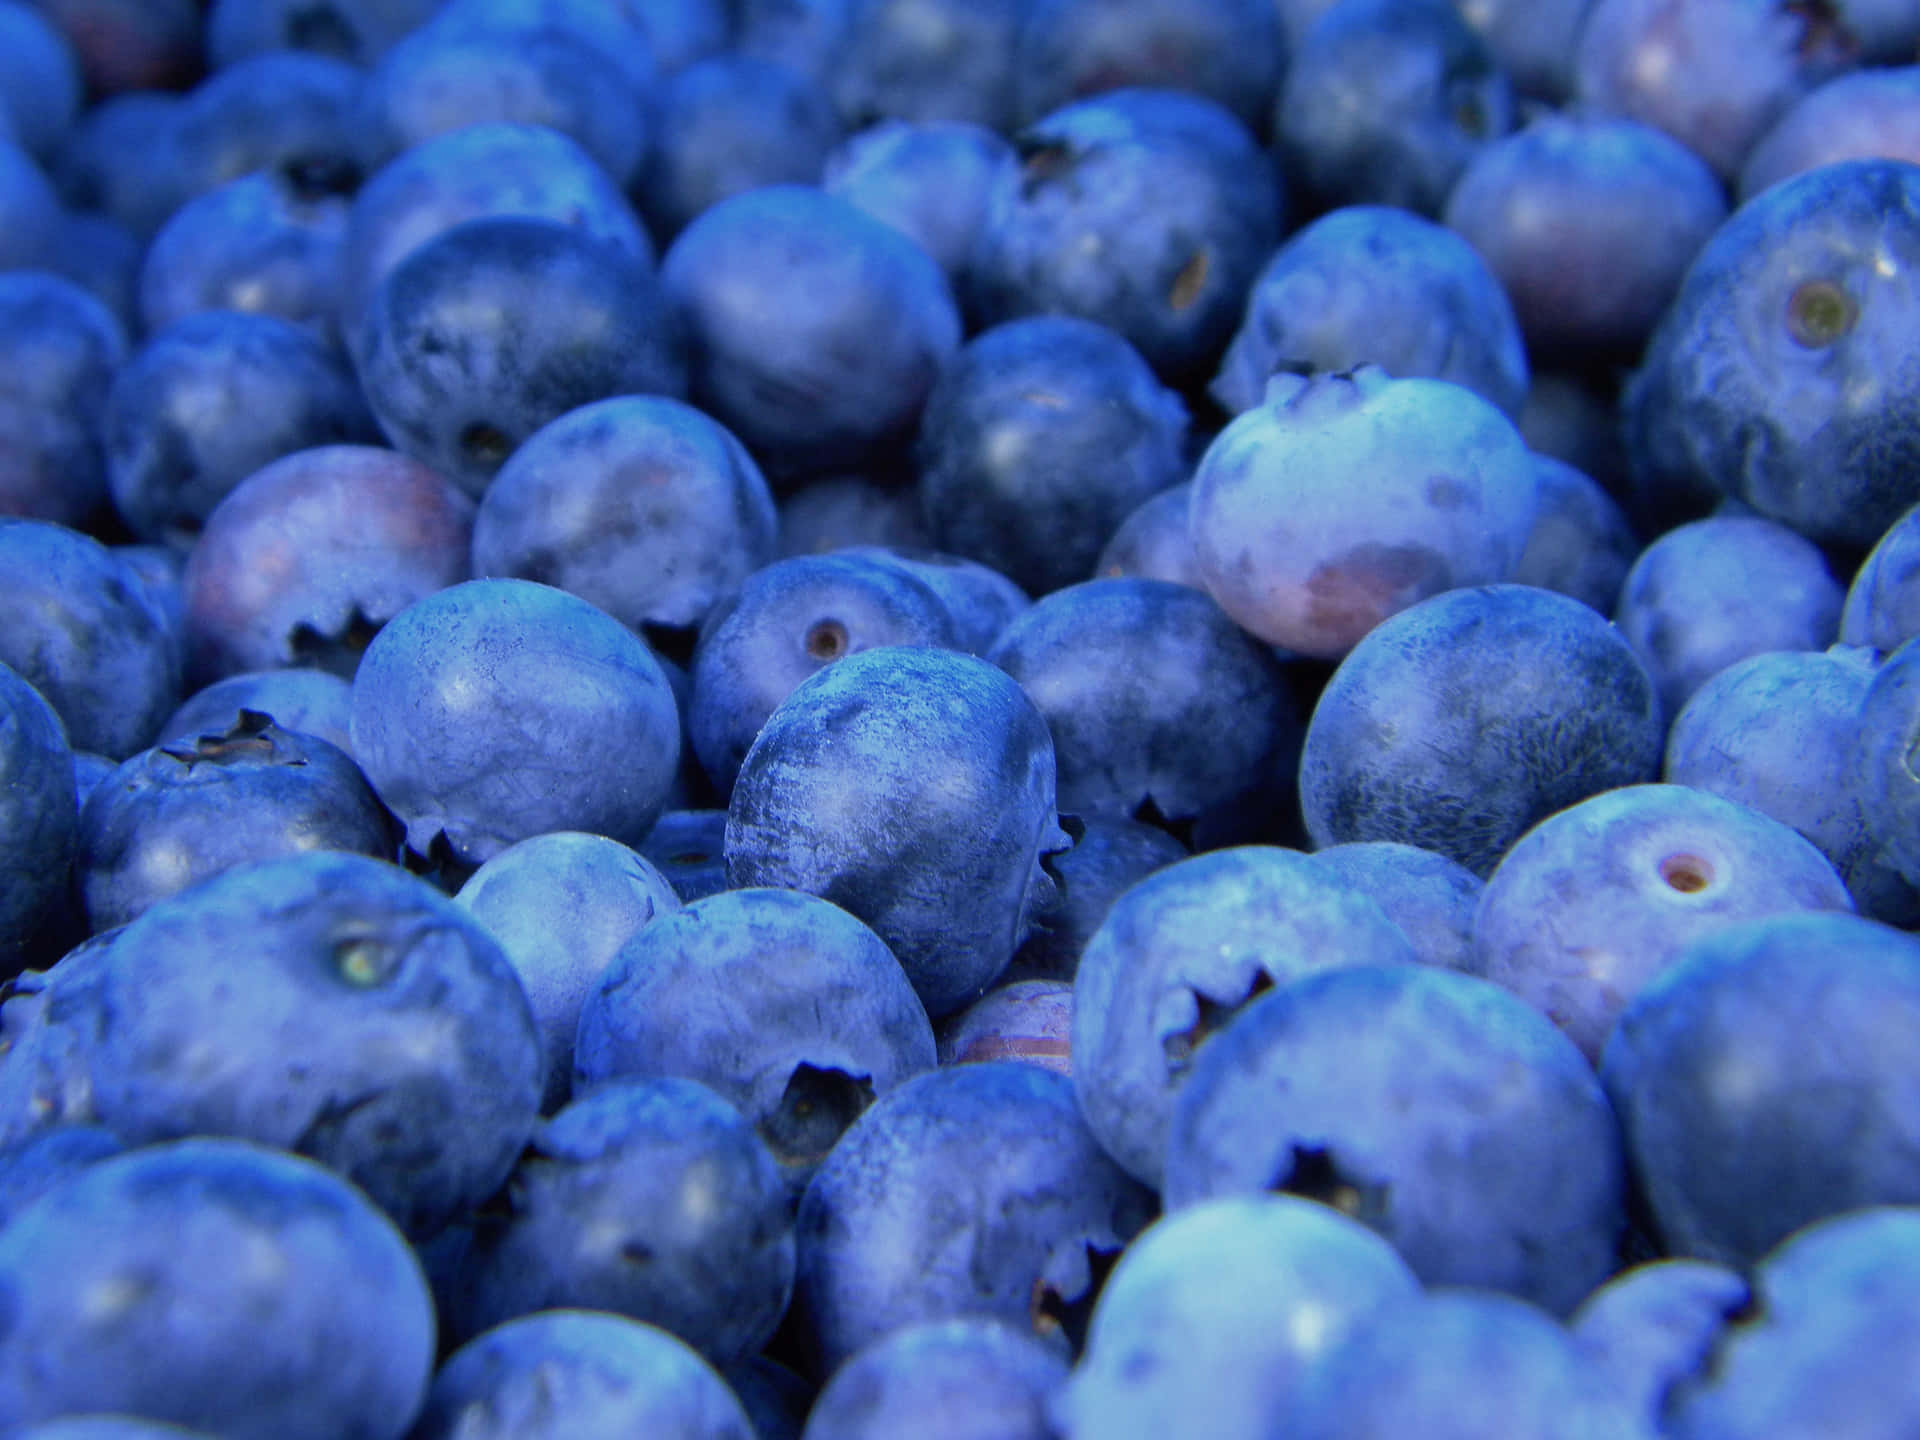 Caption: Freshly Picked Blueberries Background